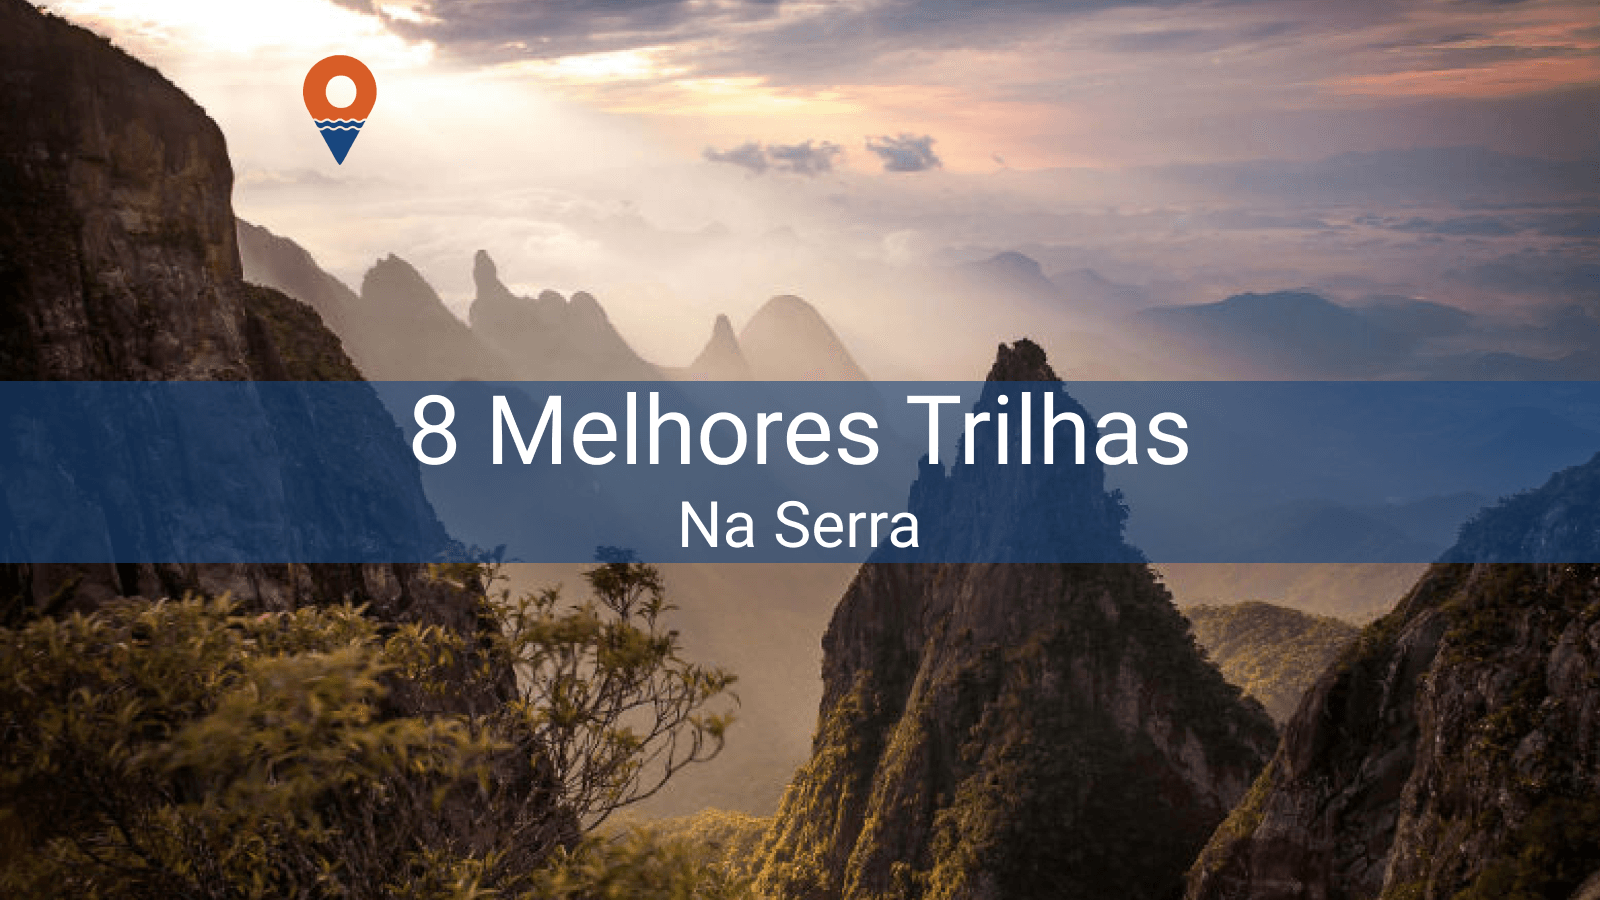 8 Wonderful trails on the brazillian mountains!